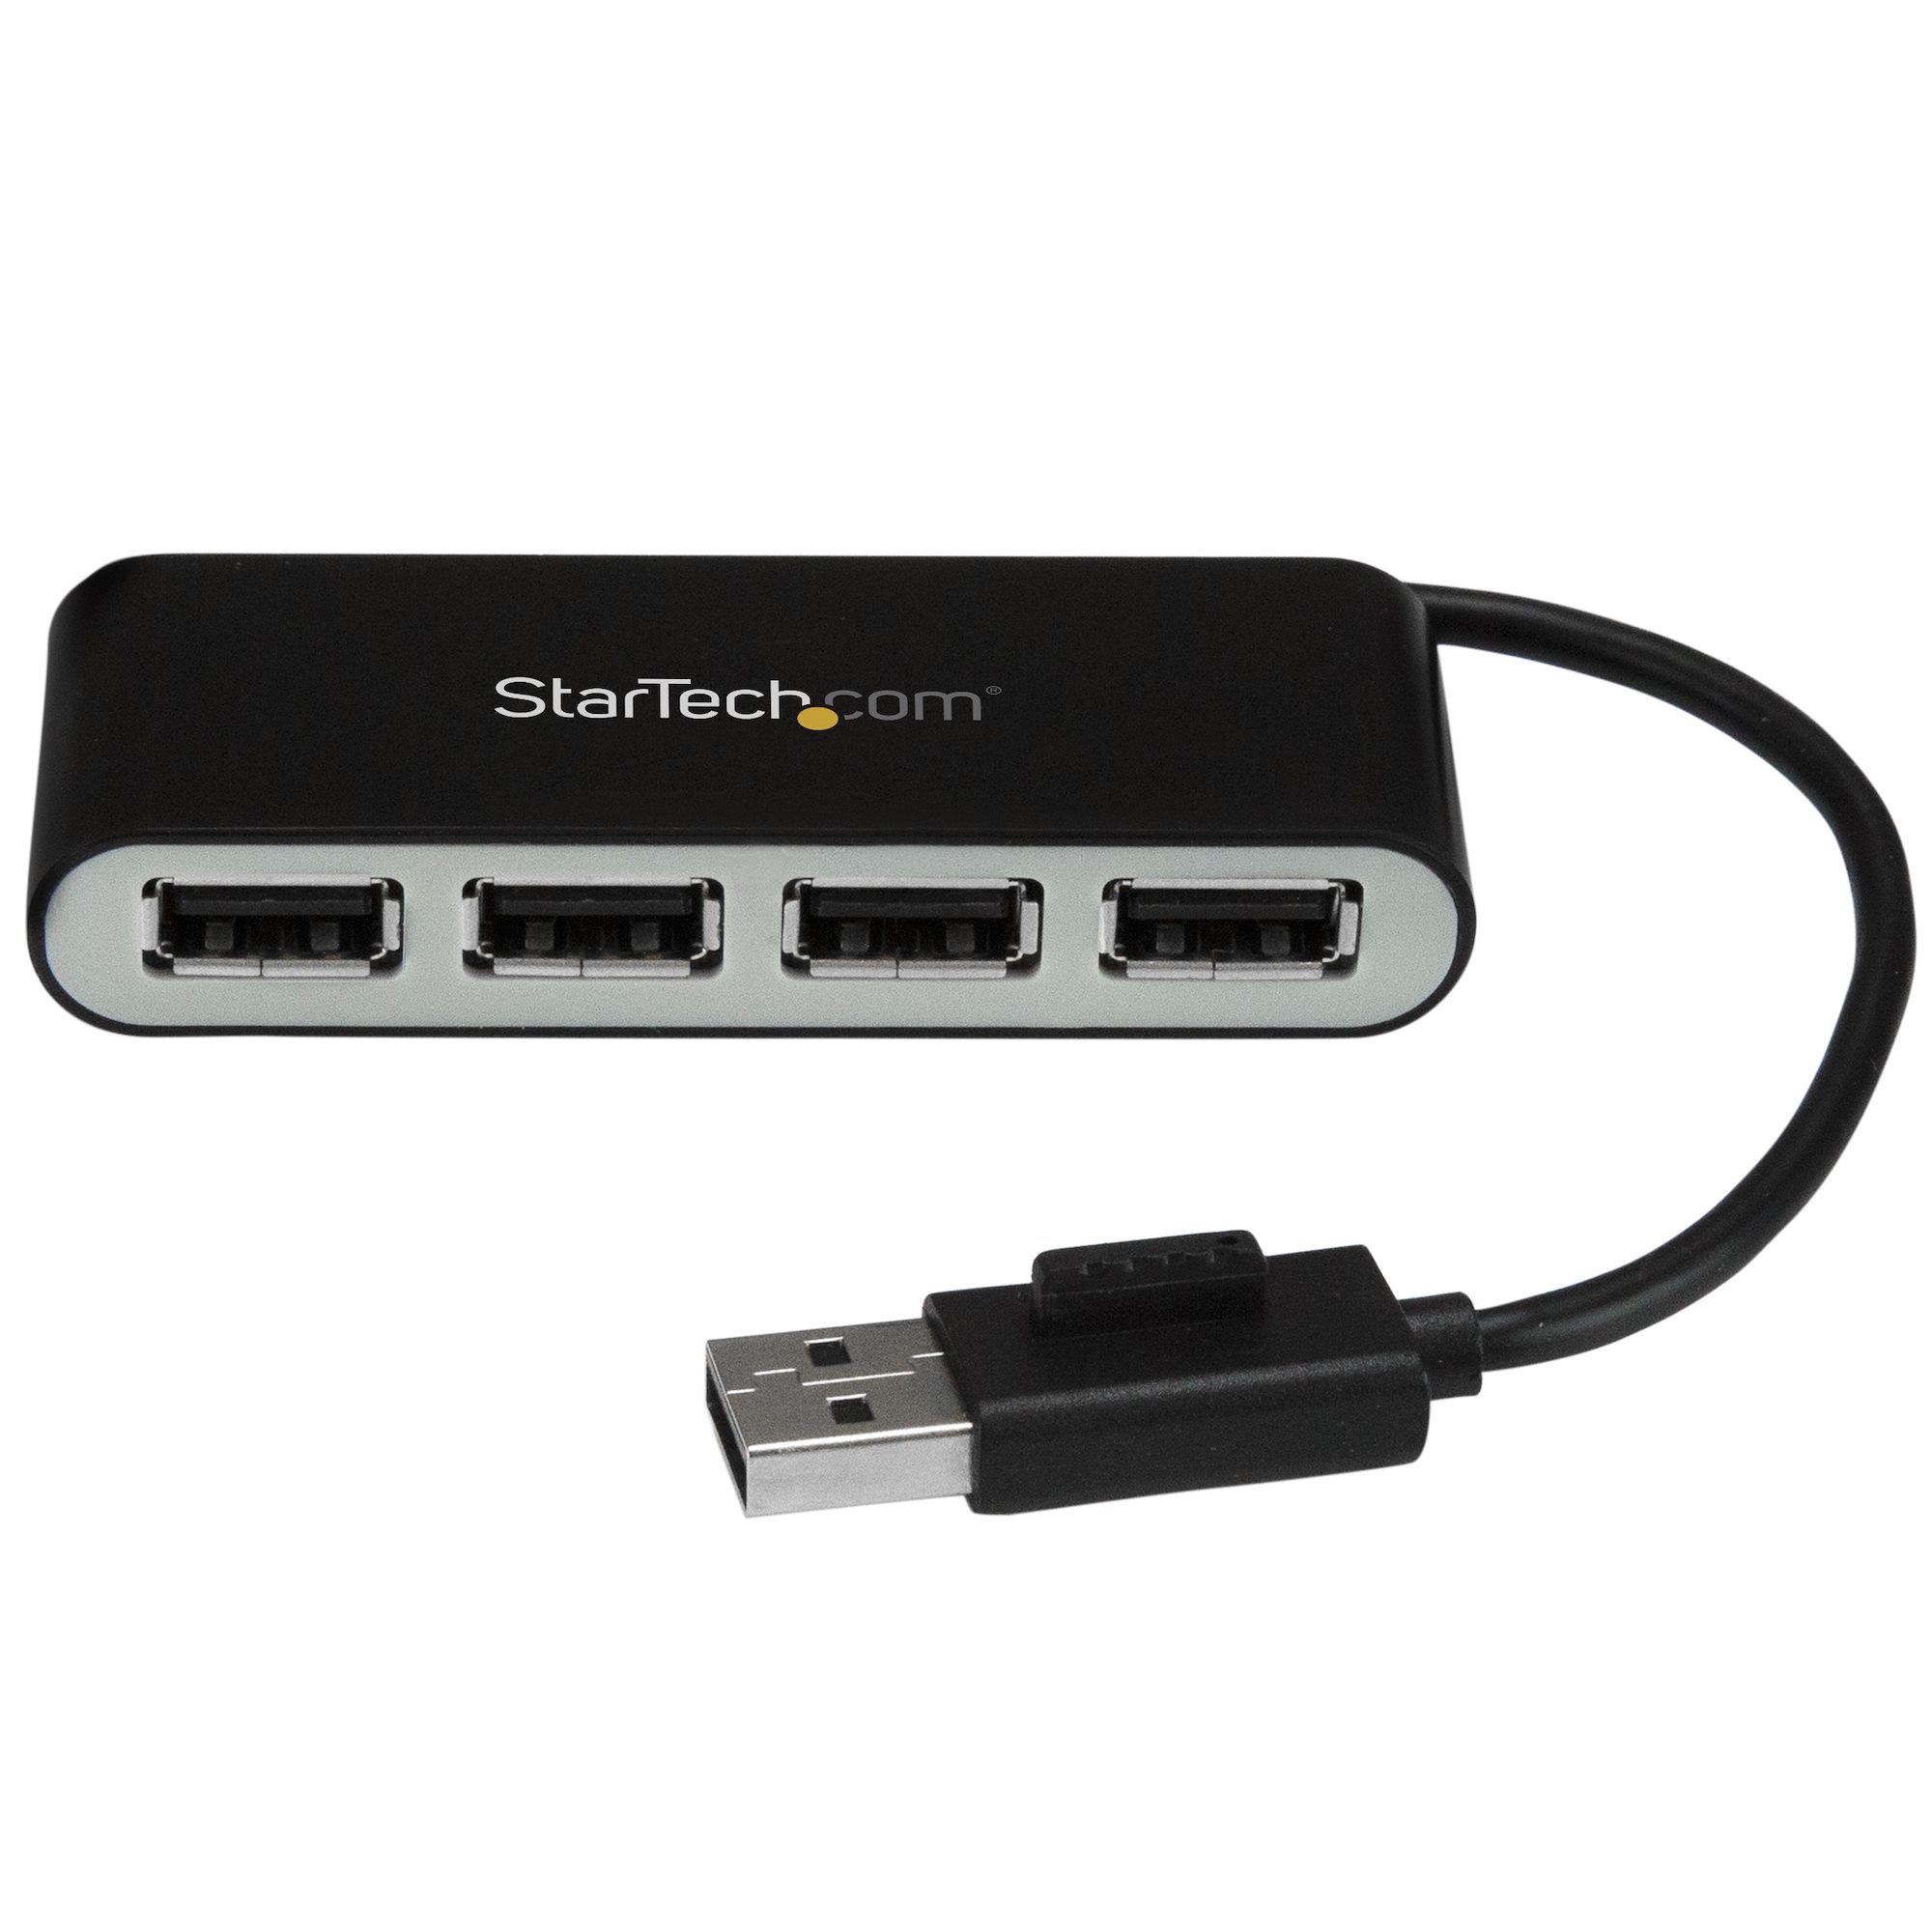 StarTech.com Concentrador USB - USB - Externo - Negro, Plata - Conforme con normas TAA - 4 Total USB Port(s) - 4 USB 2.0 Port(s) - PC, Mac, Linux